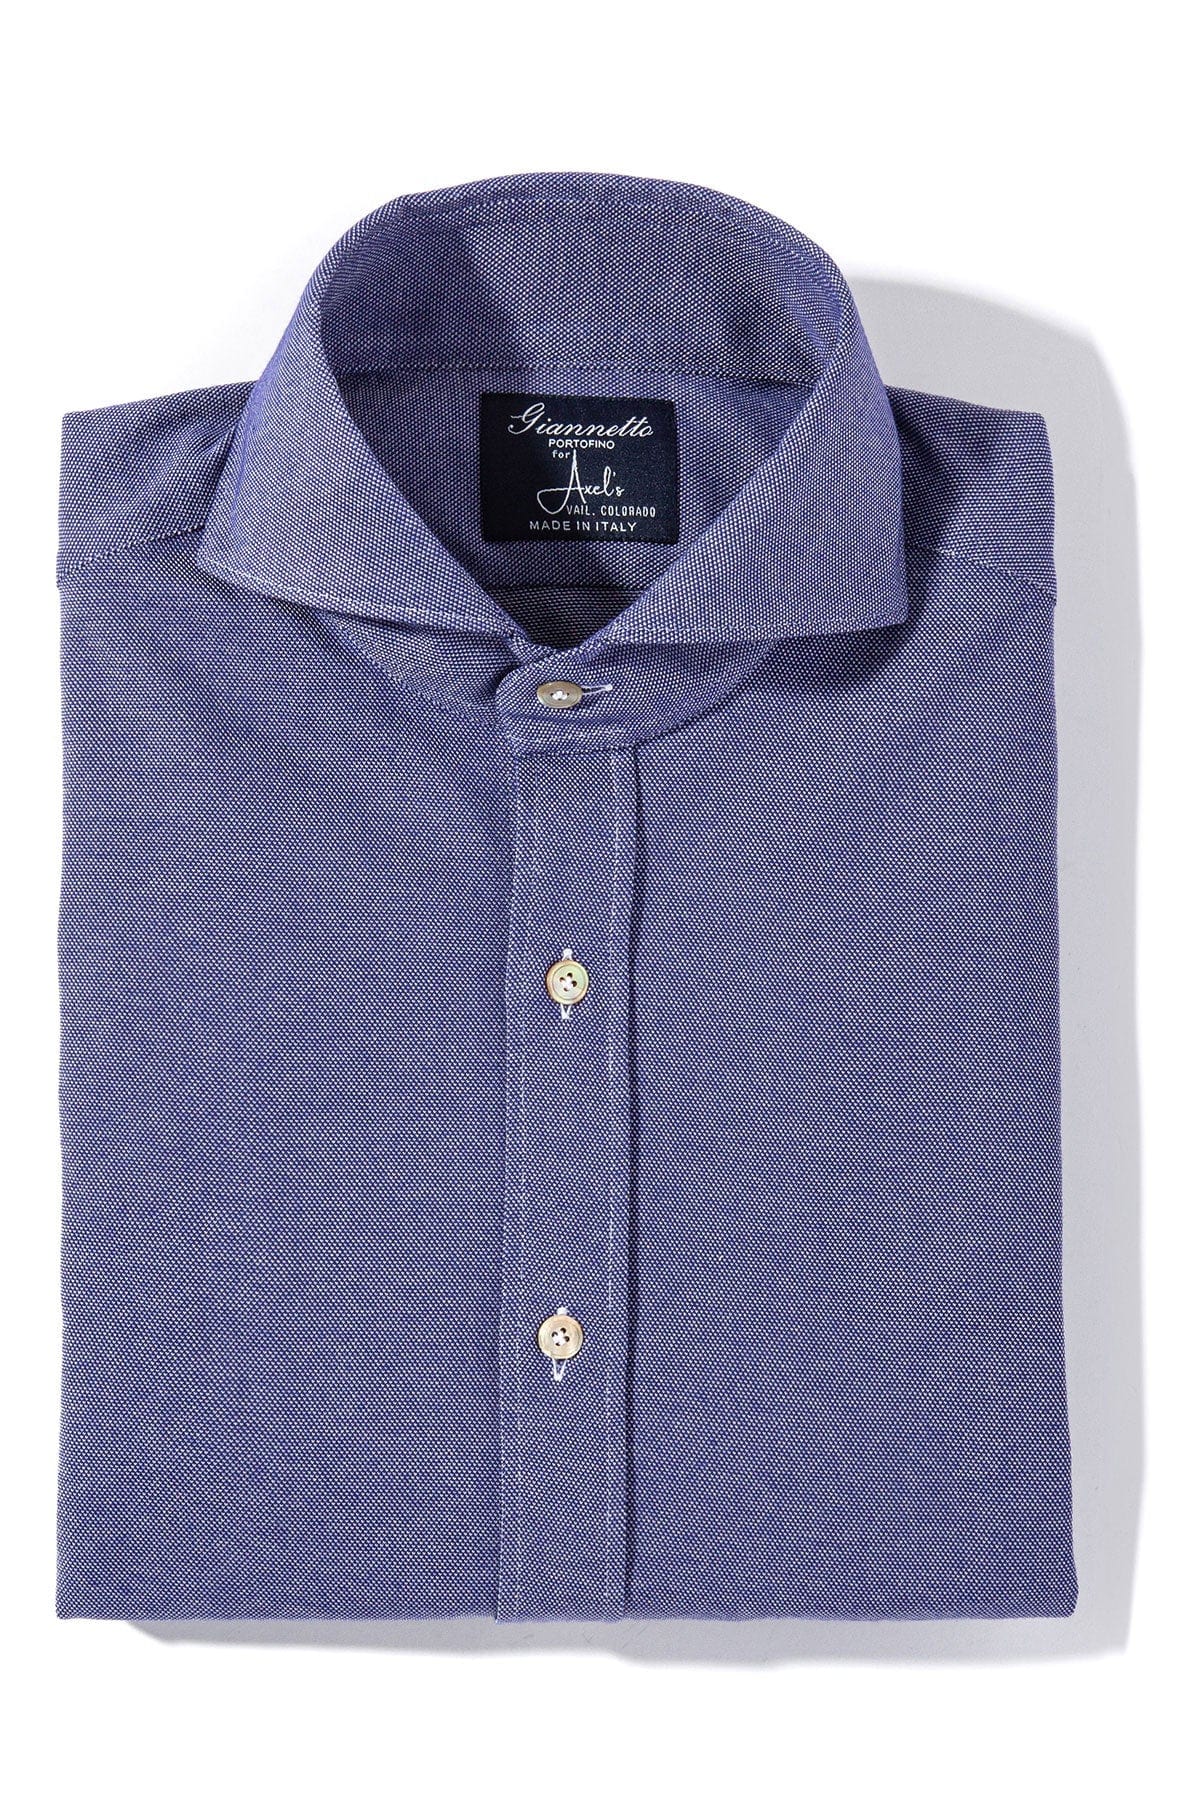 Menerbes Jersey Shirt in Indigo Blu - AXEL'S